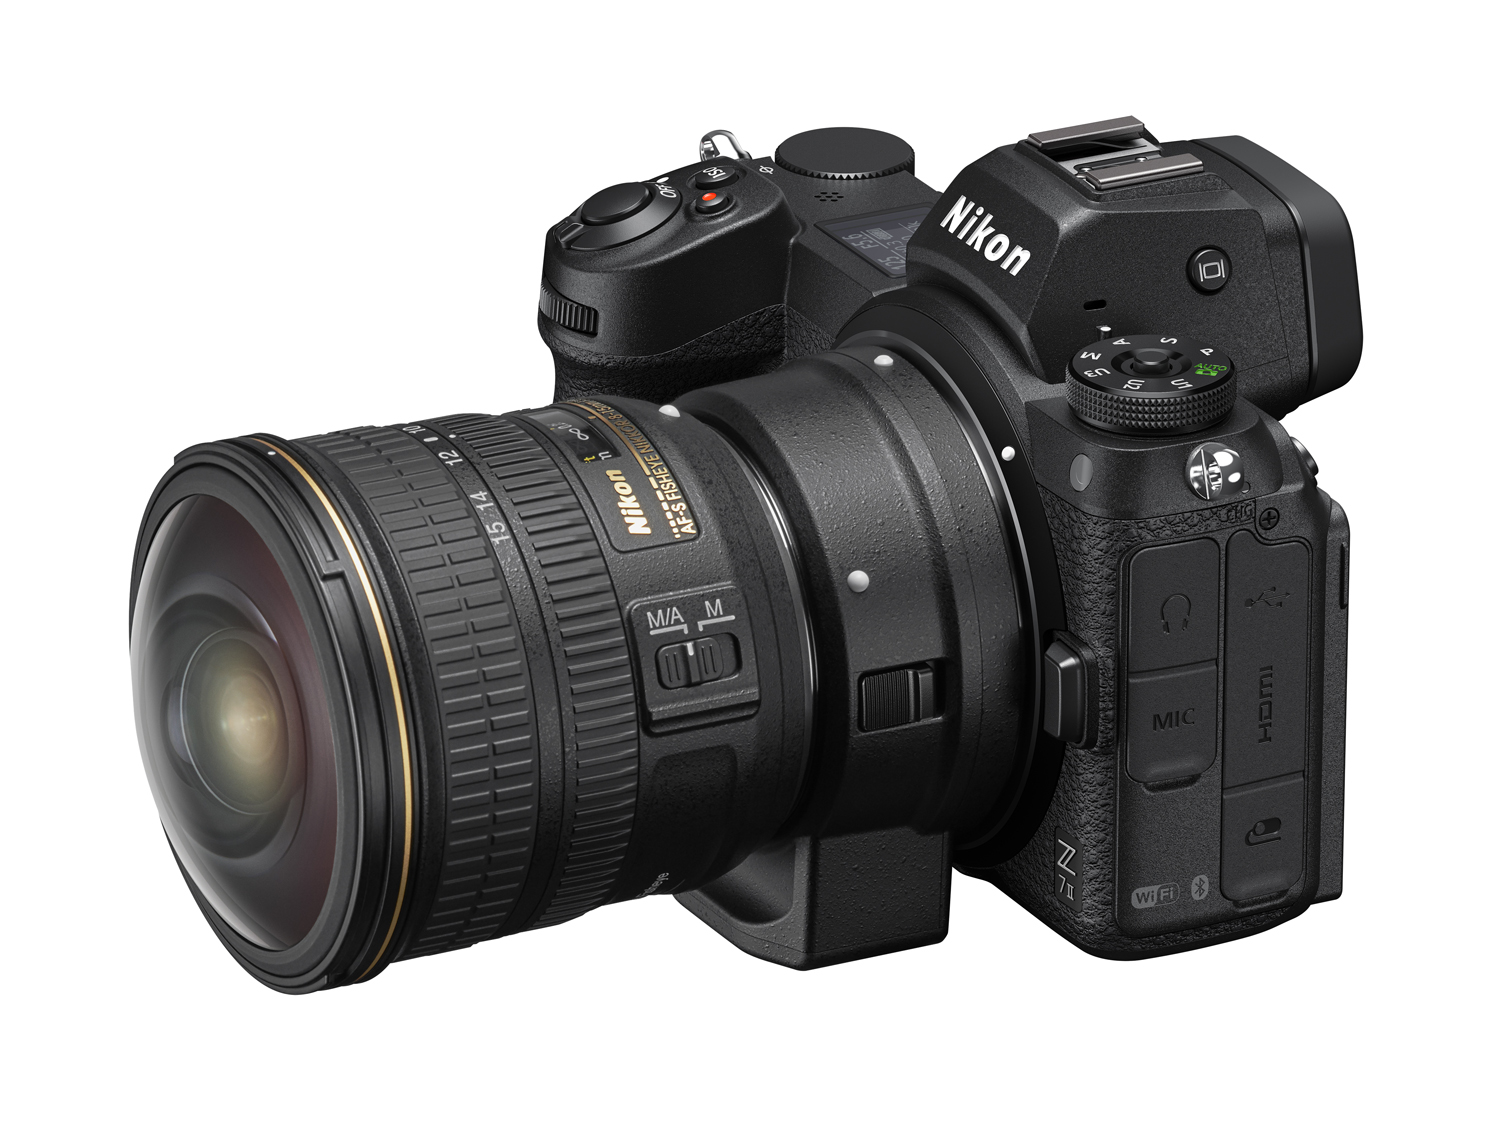 Nikkor F lens connected via adapter to Nikon Z7II.